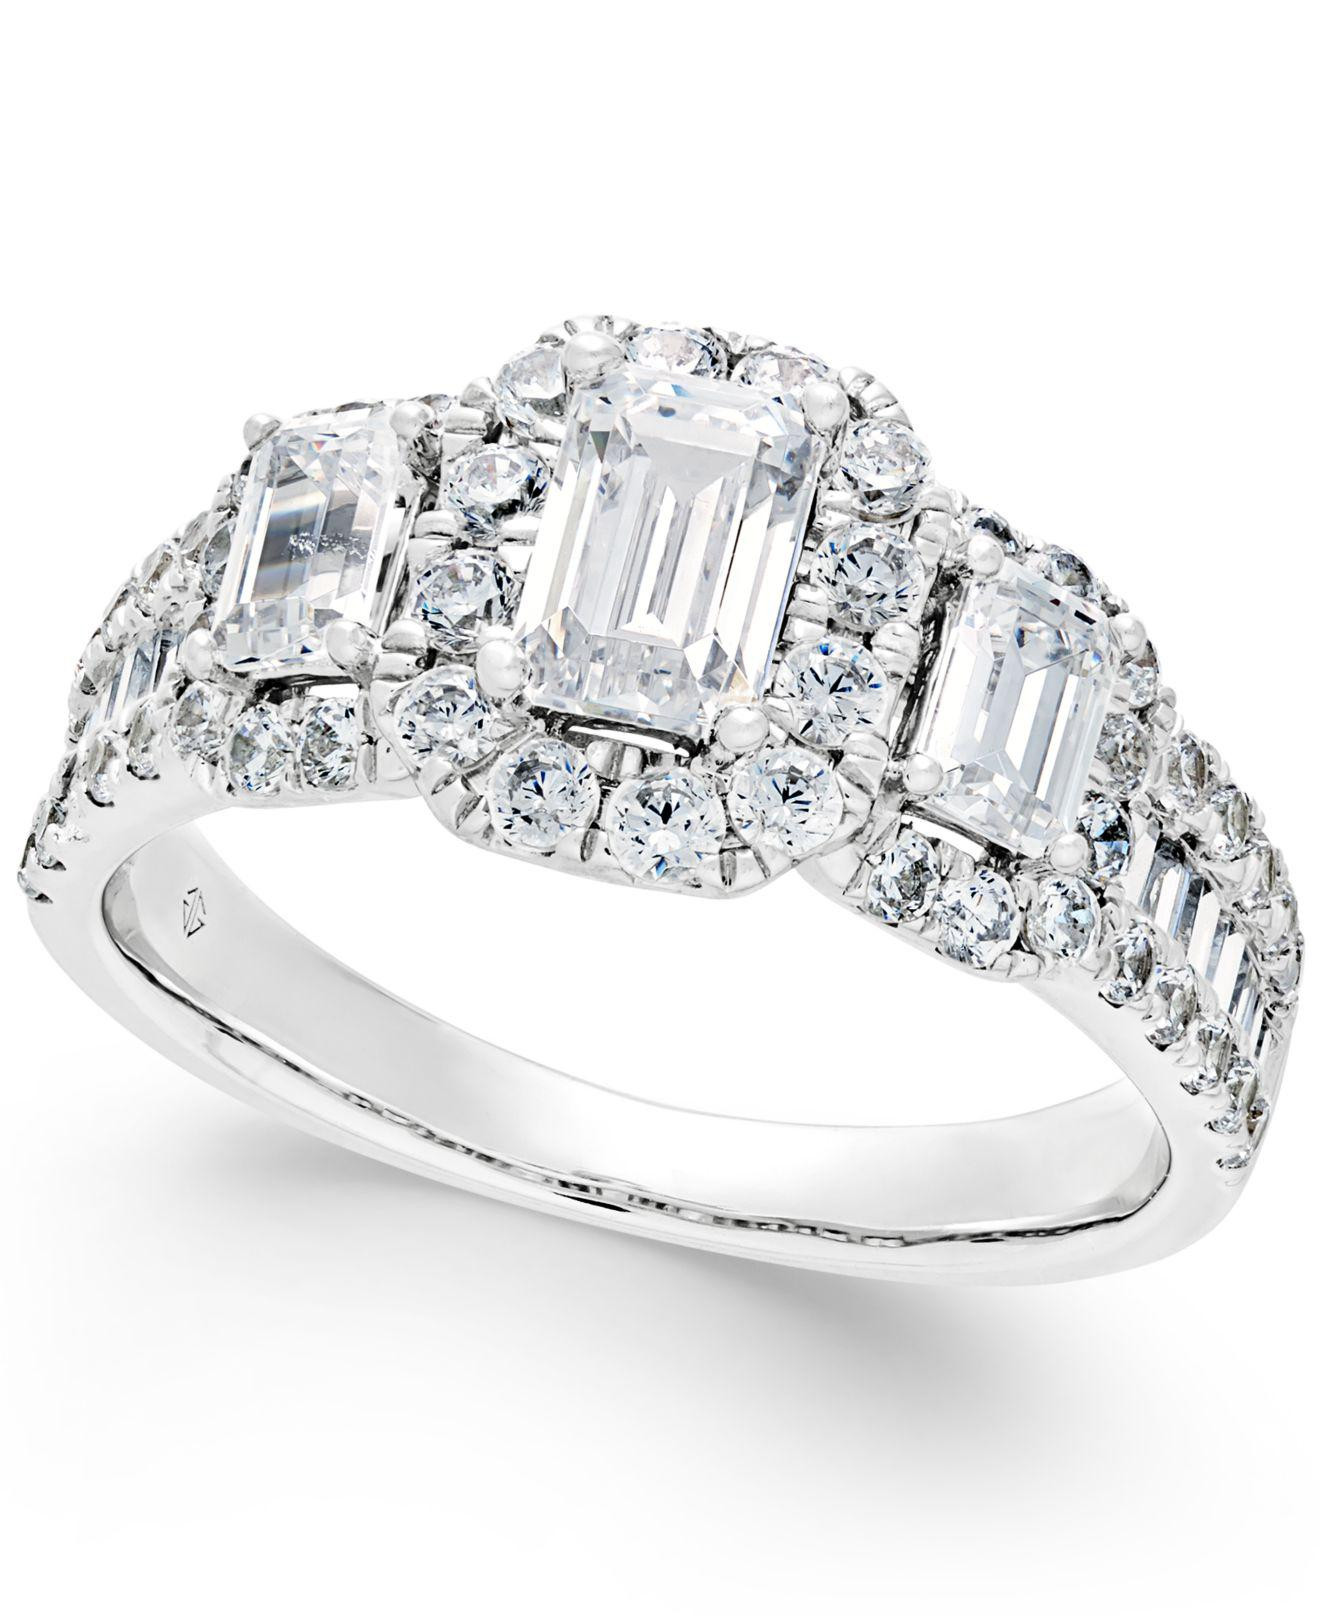 2 Ct Diamond Engagement Ring
 Lyst Macy S Diamond Engagement Ring 2 Ct T w In 14k